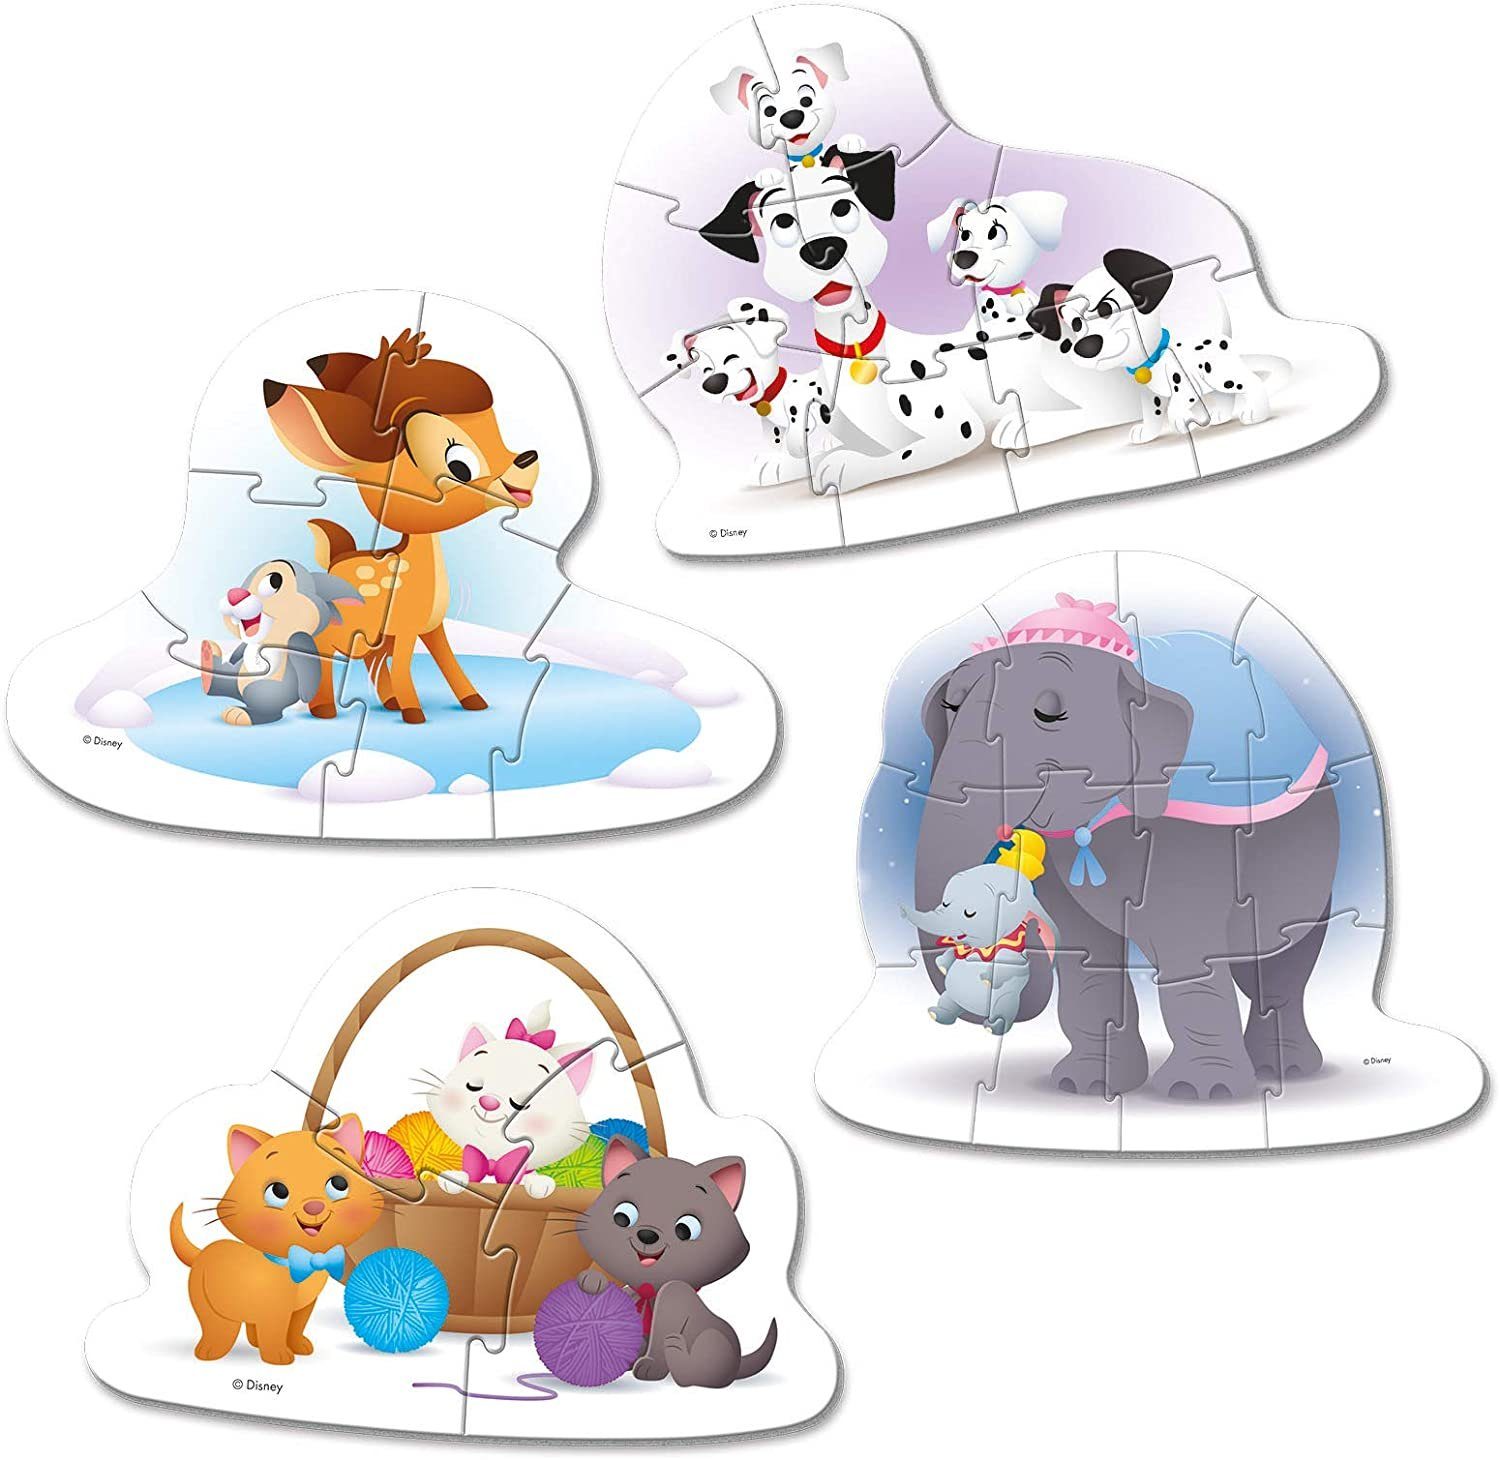 4 Future Friends Disney Play Animal Teile, 6, Puzzle 9, 12 for Puzzleteile Clementoni® 3, Mini-Puzzle